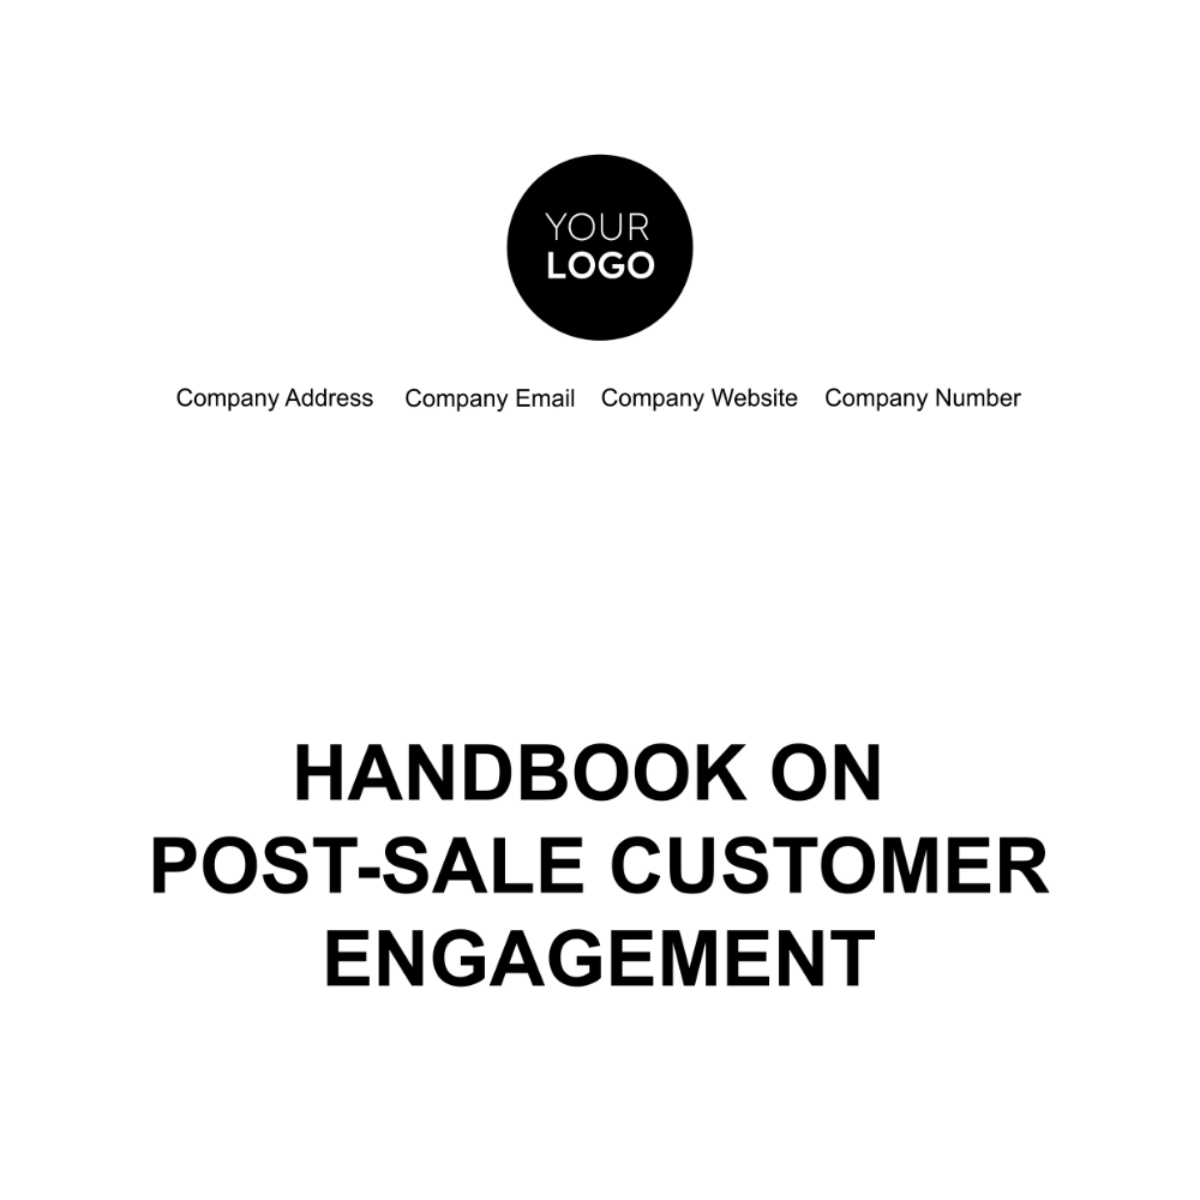 Free Handbook on Post-Sale Customer Engagement Template